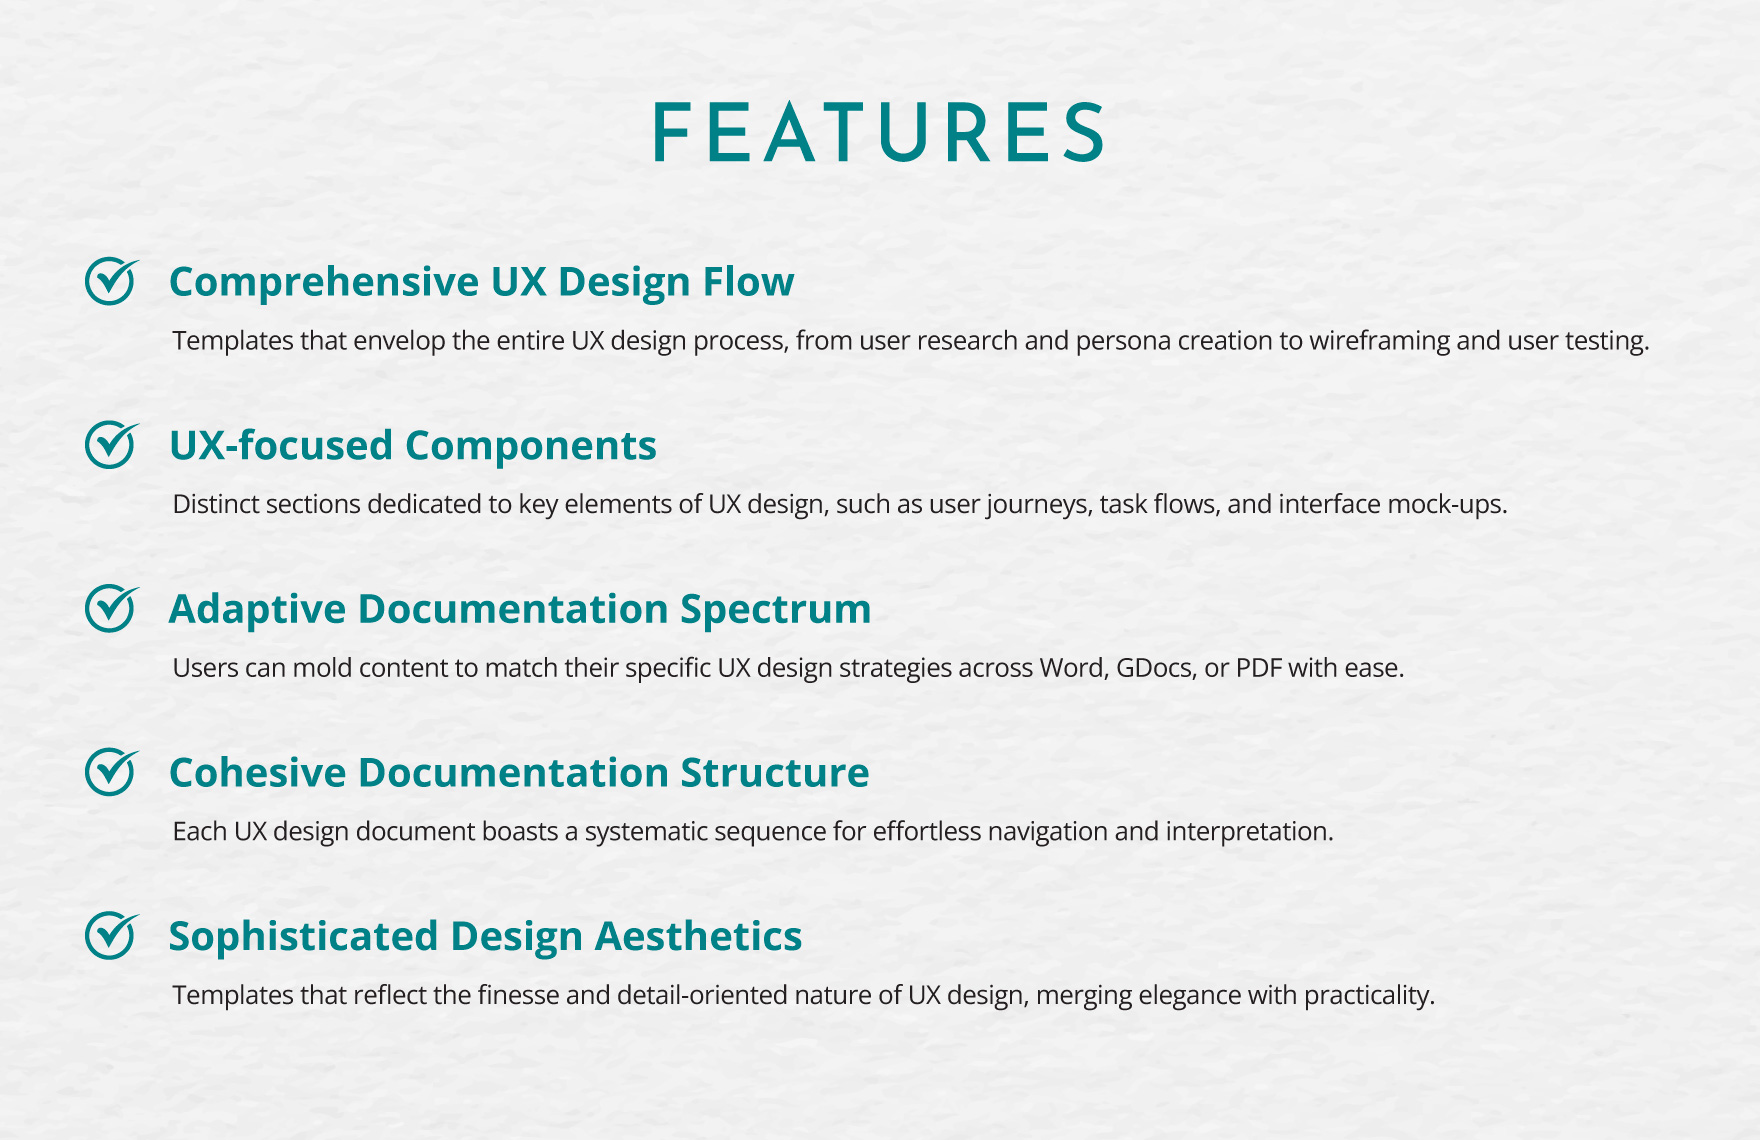 IT UX Design Review Checklist Template